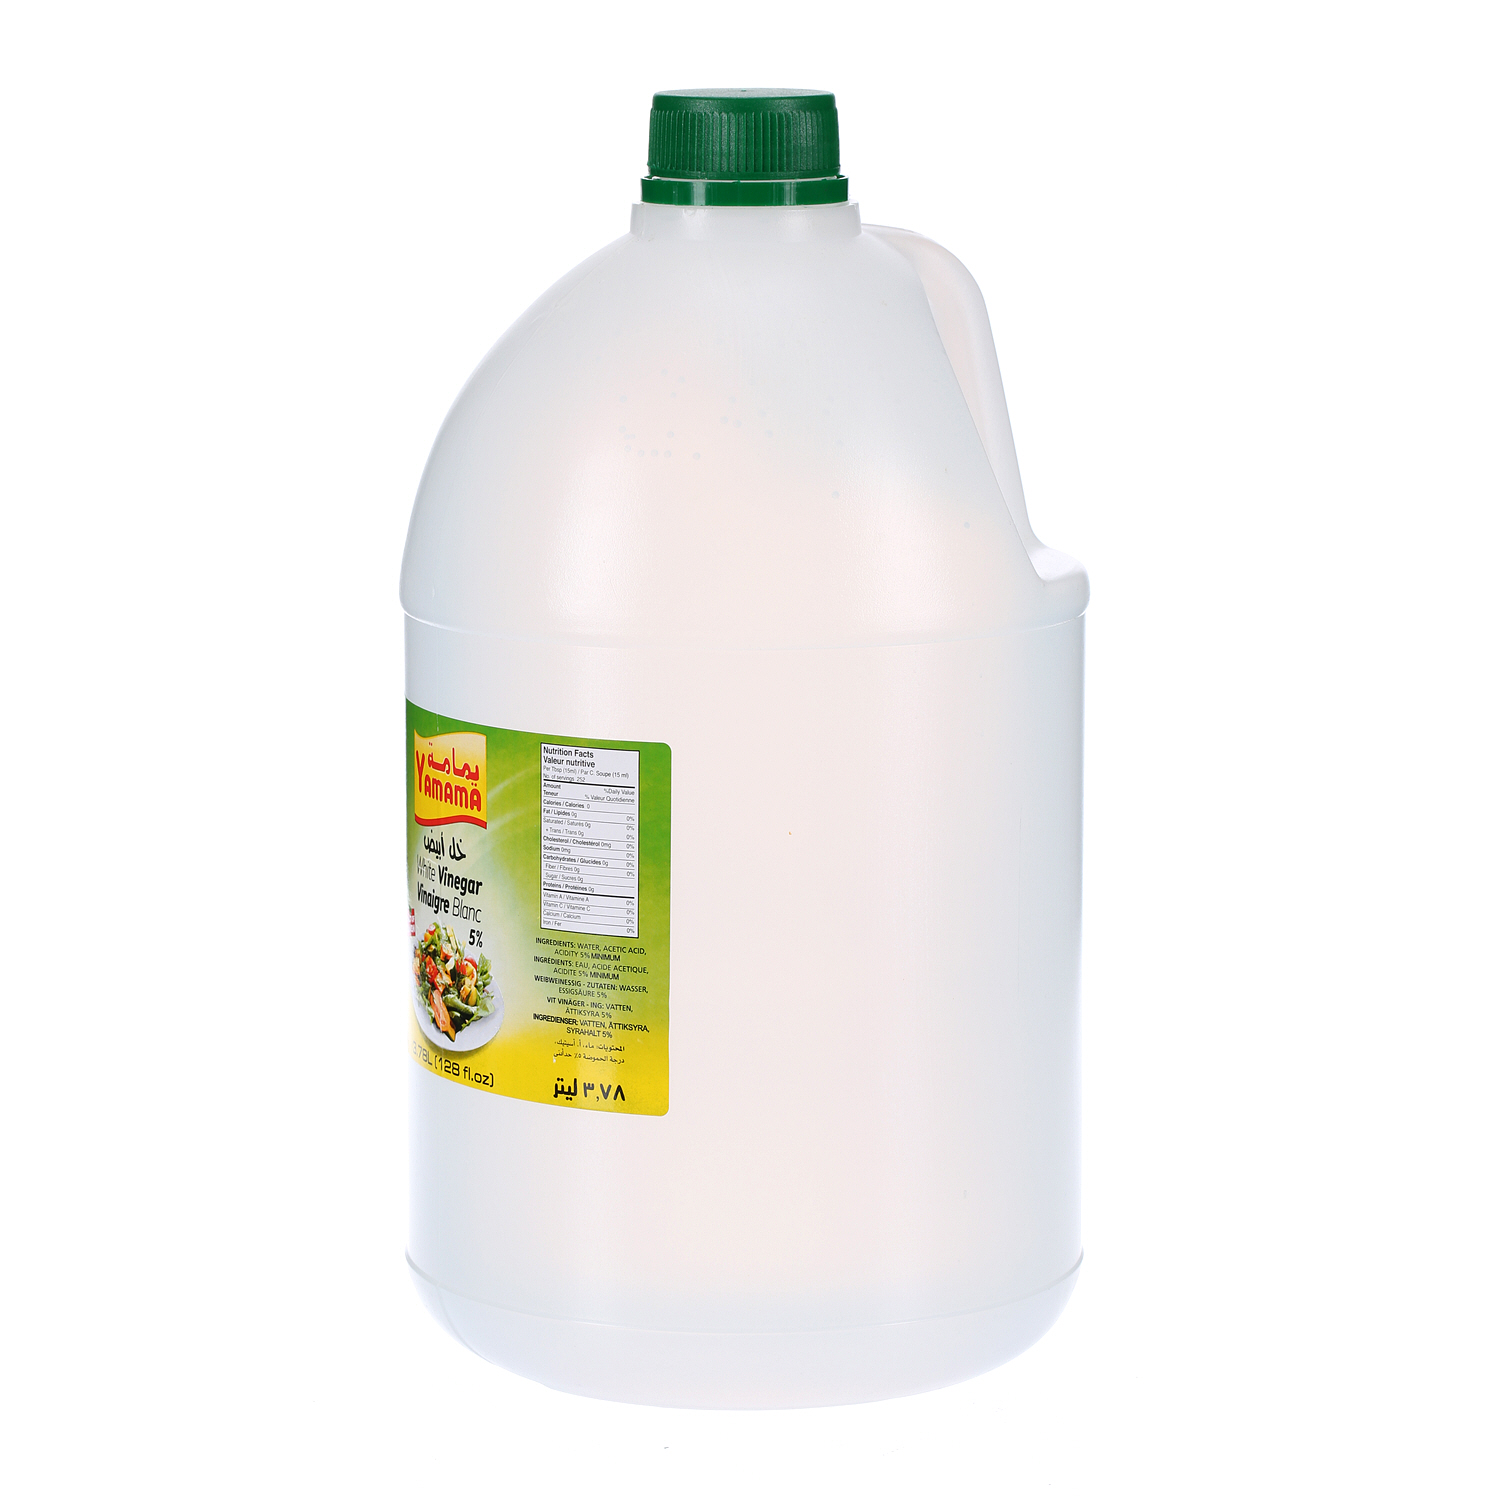 Yamama White Vinegar 1 Gallon